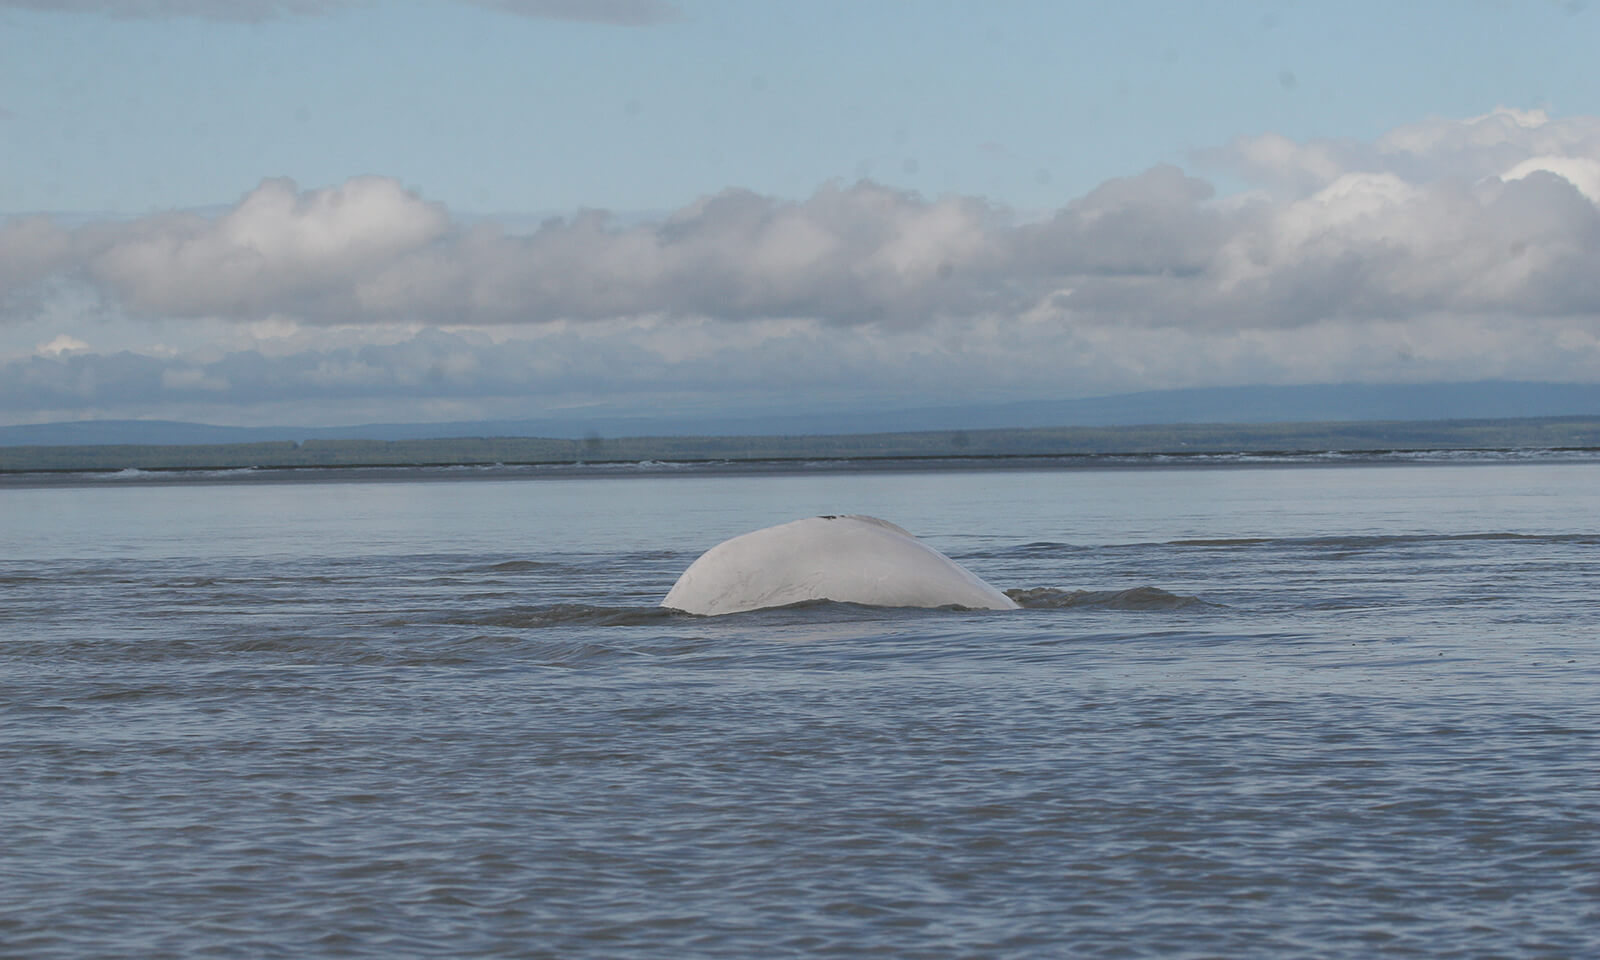 Beluga whale dorsal